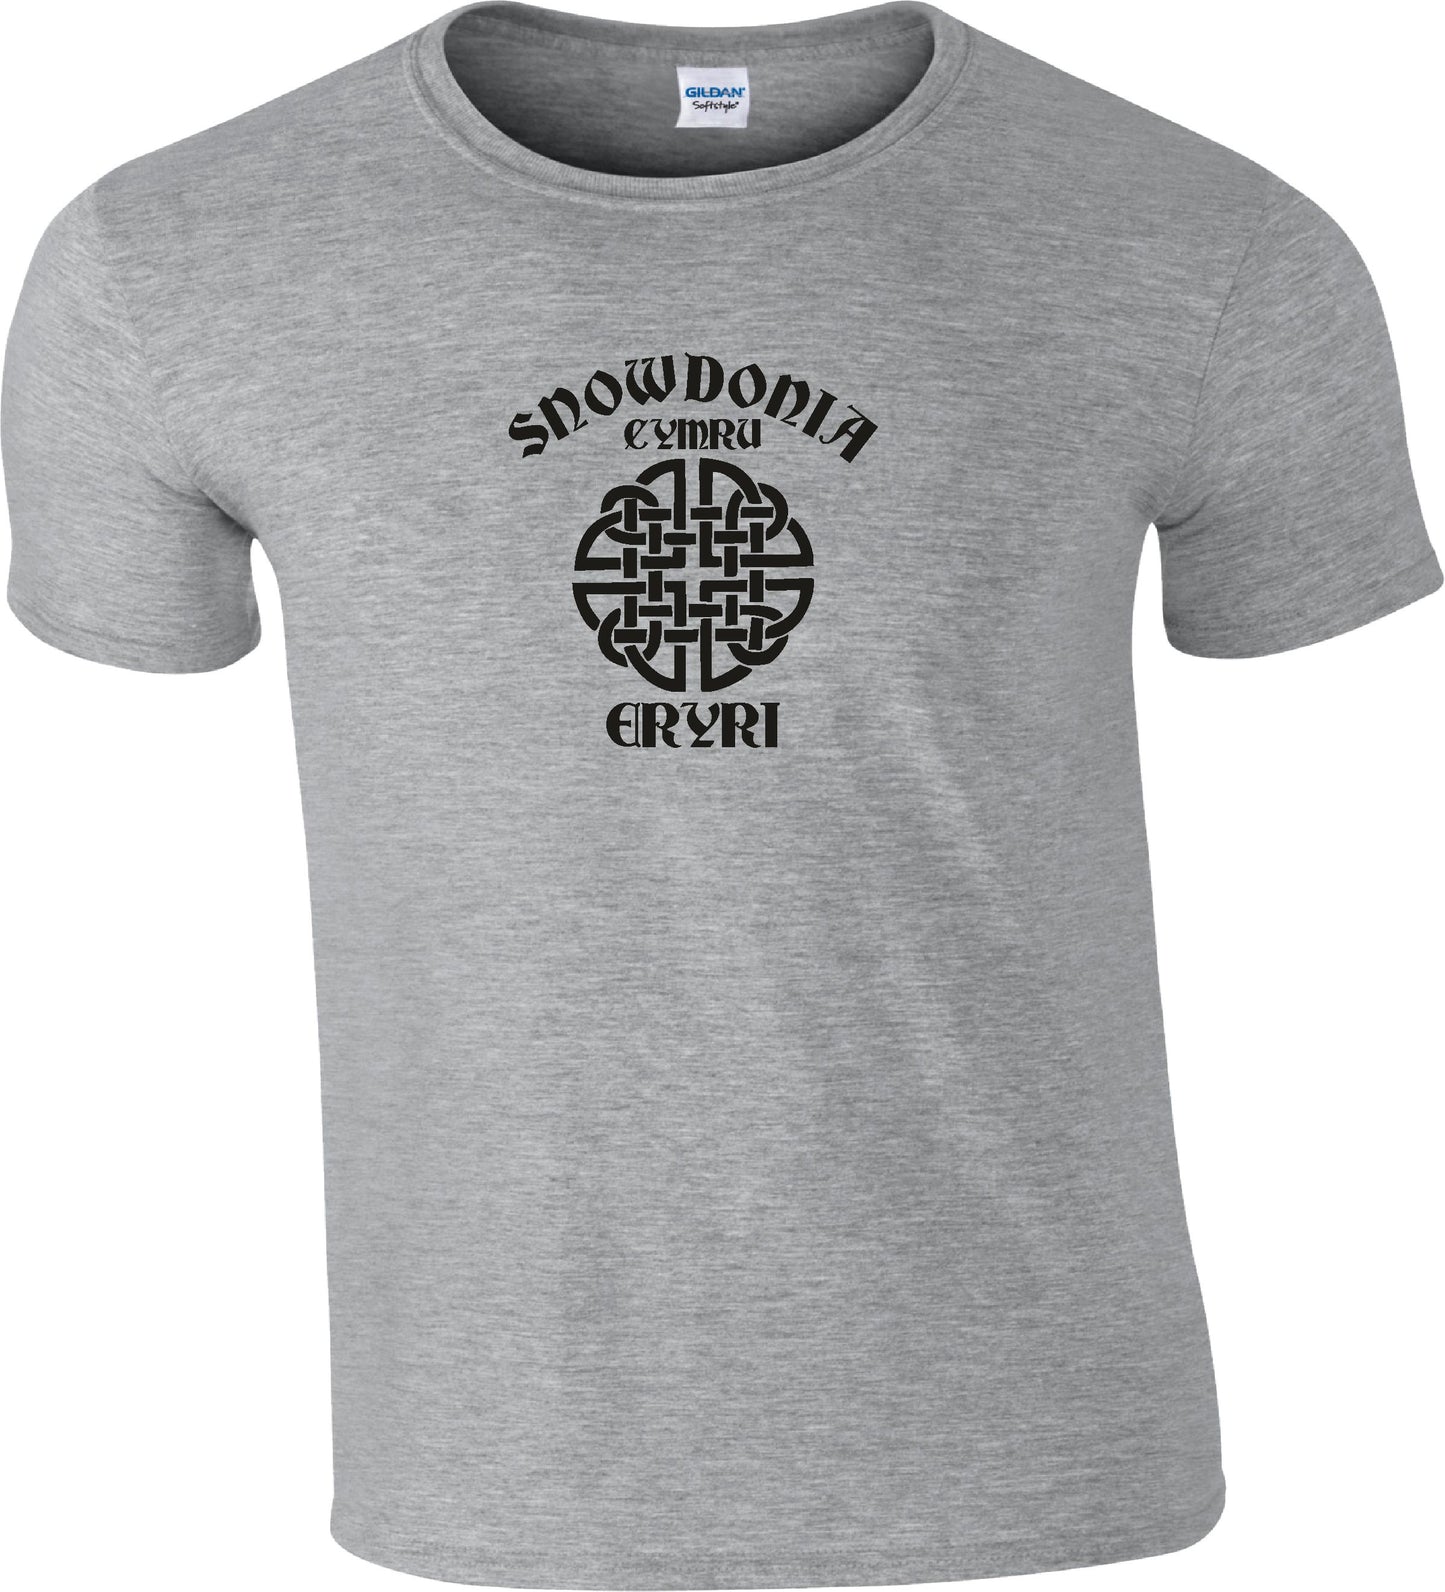 Snowdonia T-Shirt - Hiking, Mountain, Eryri Souvenir, Various Colours